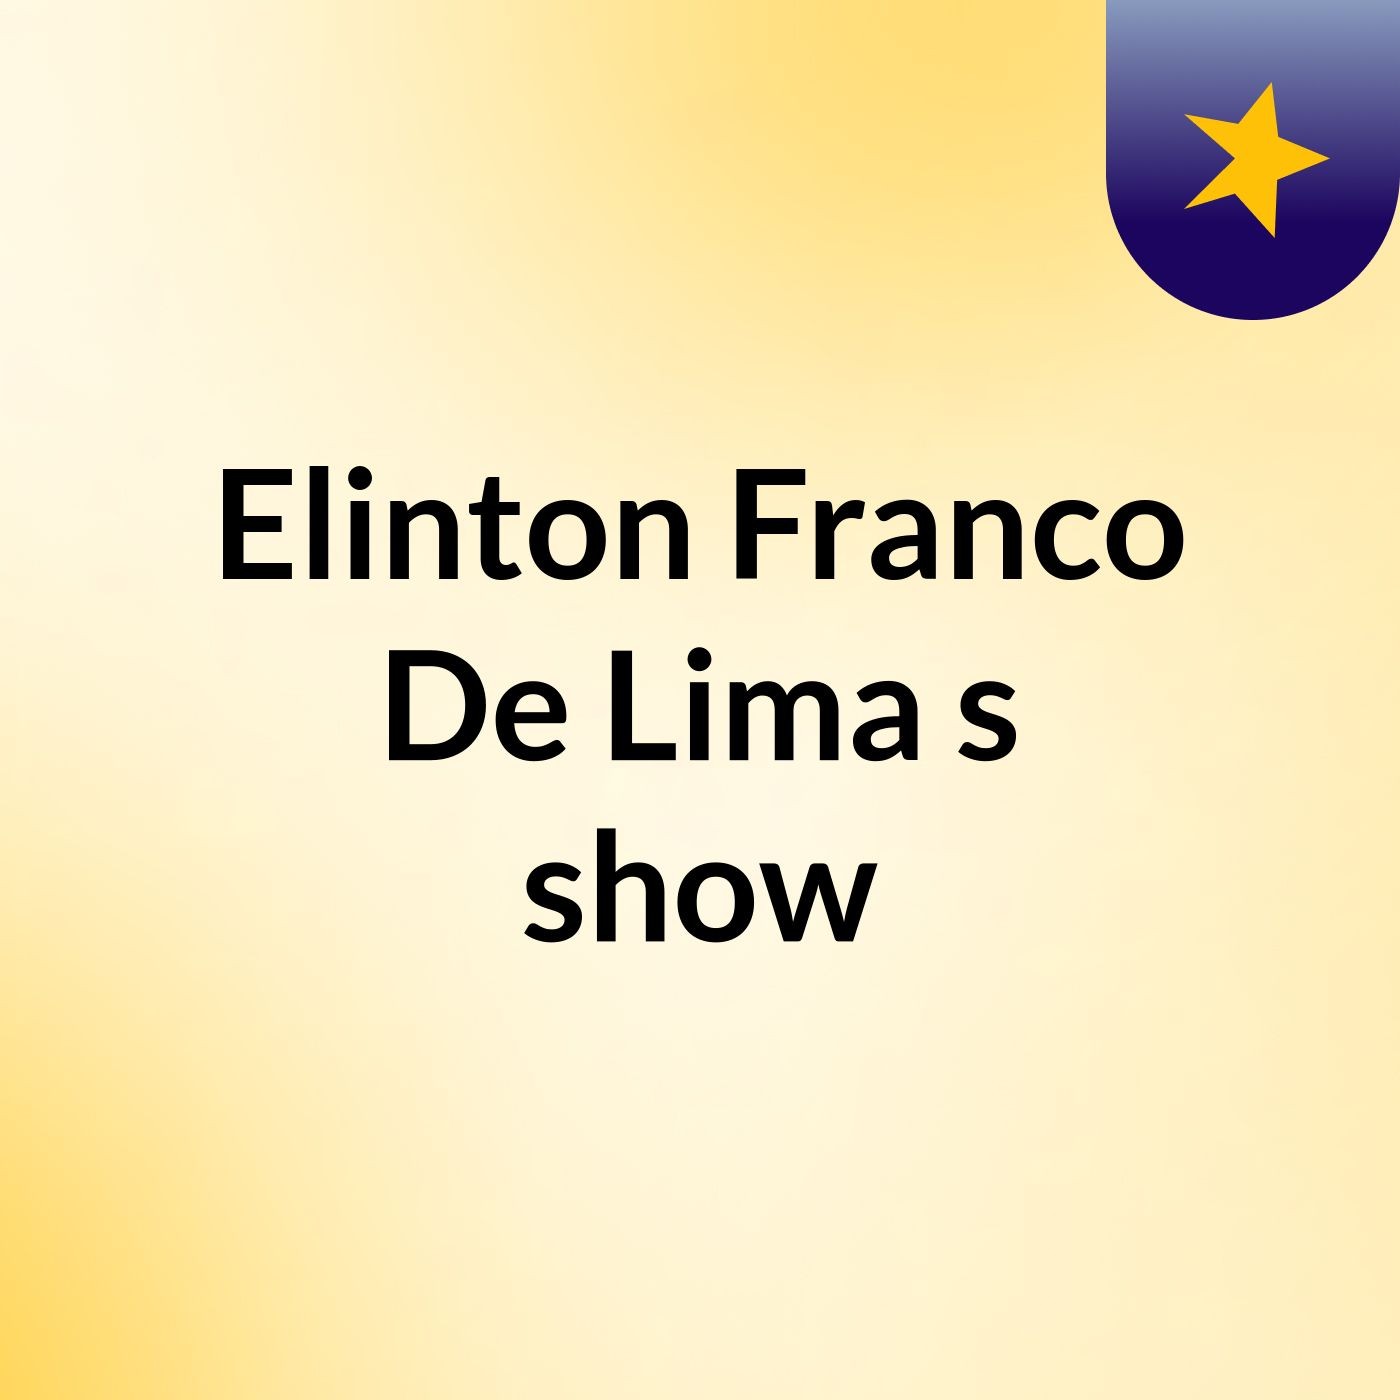 Elinton Franco De Lima's show